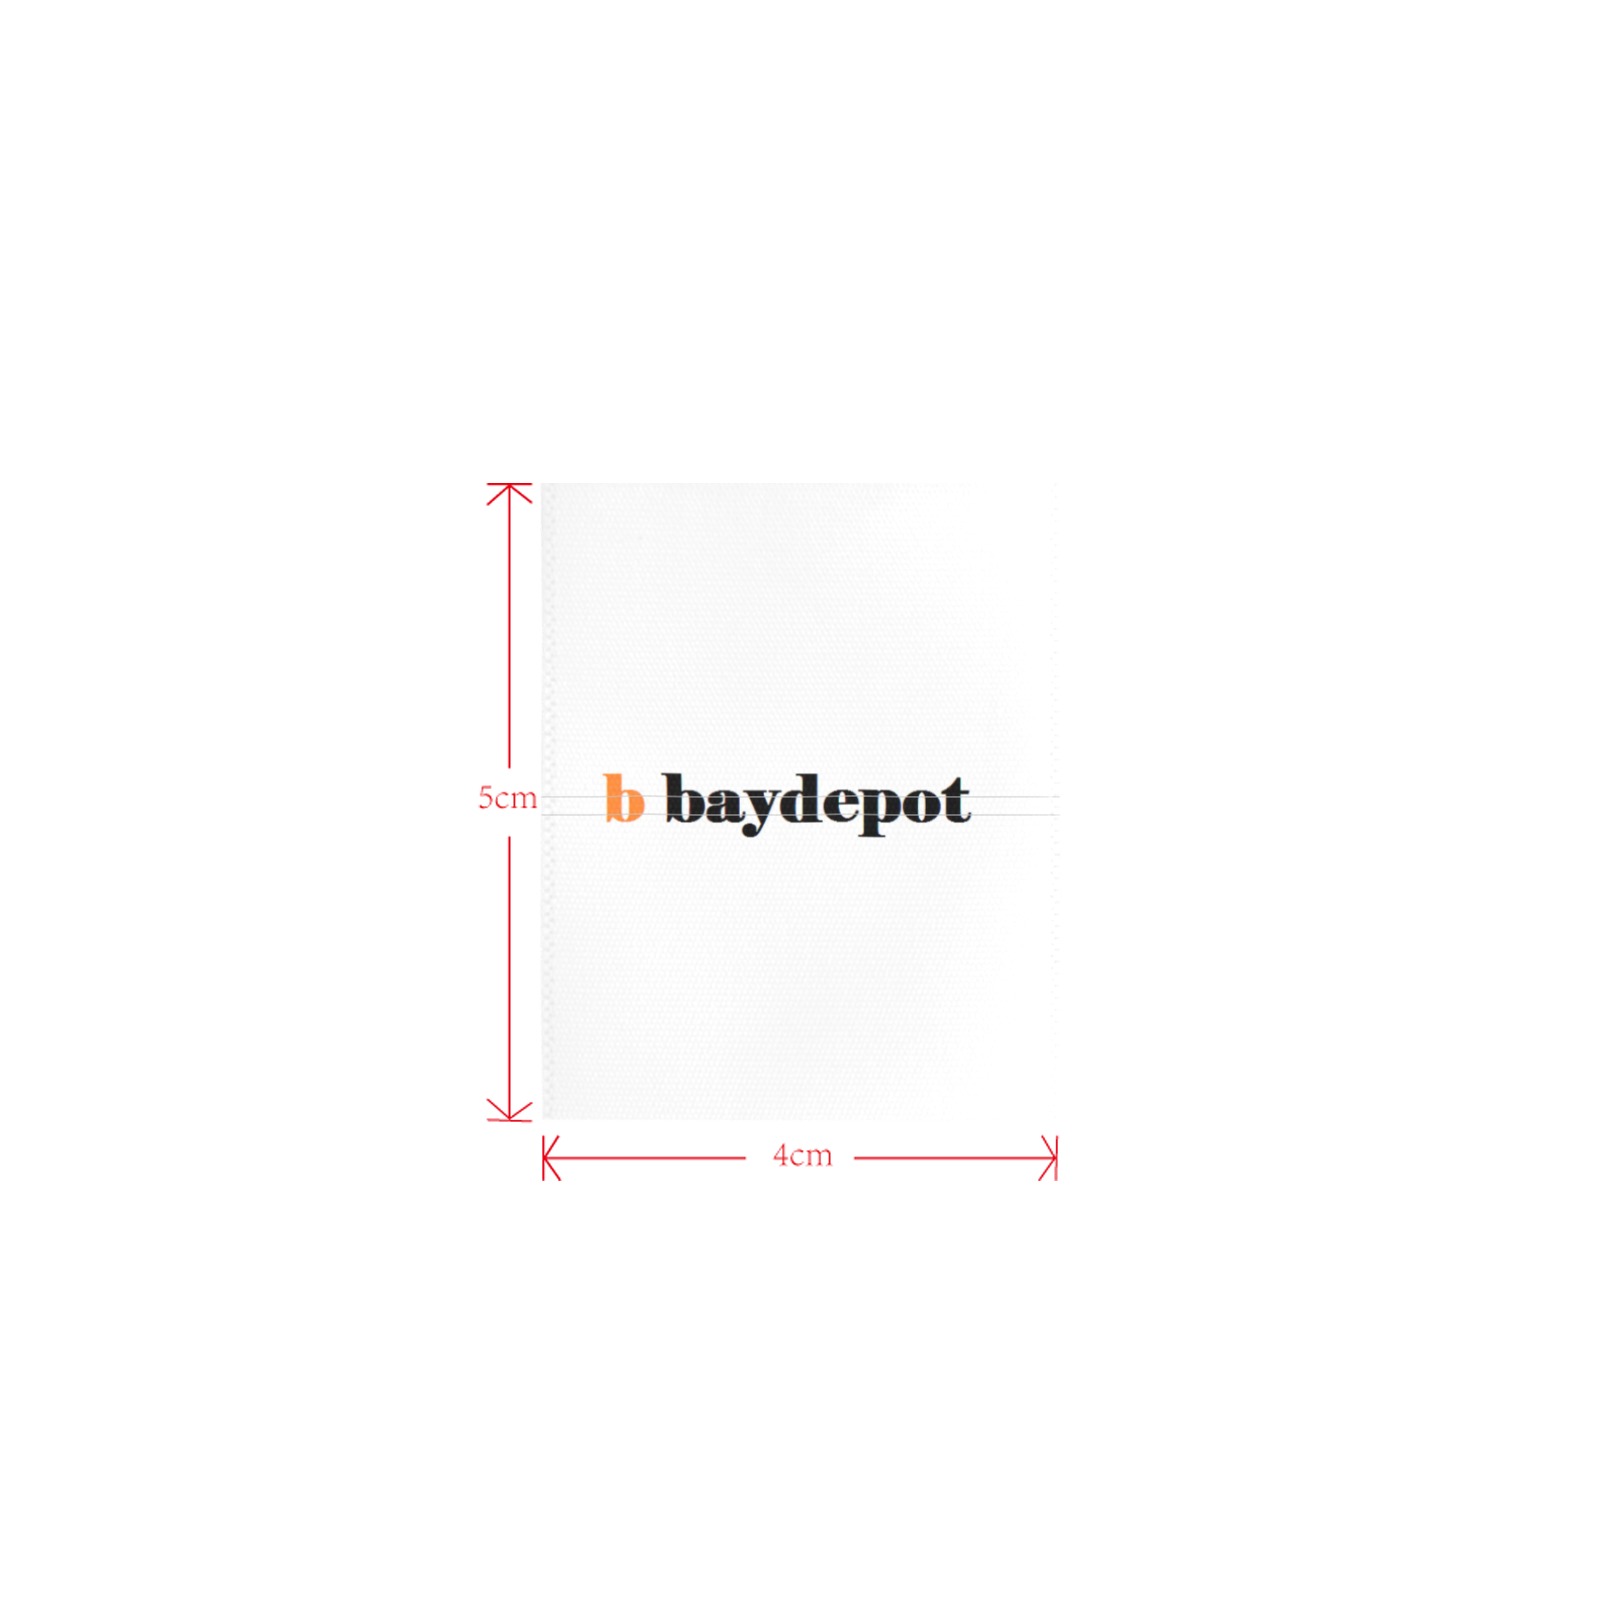 BBAYDEPOT LOGO Logo for Women's Tank Top (4cm X 5cm)